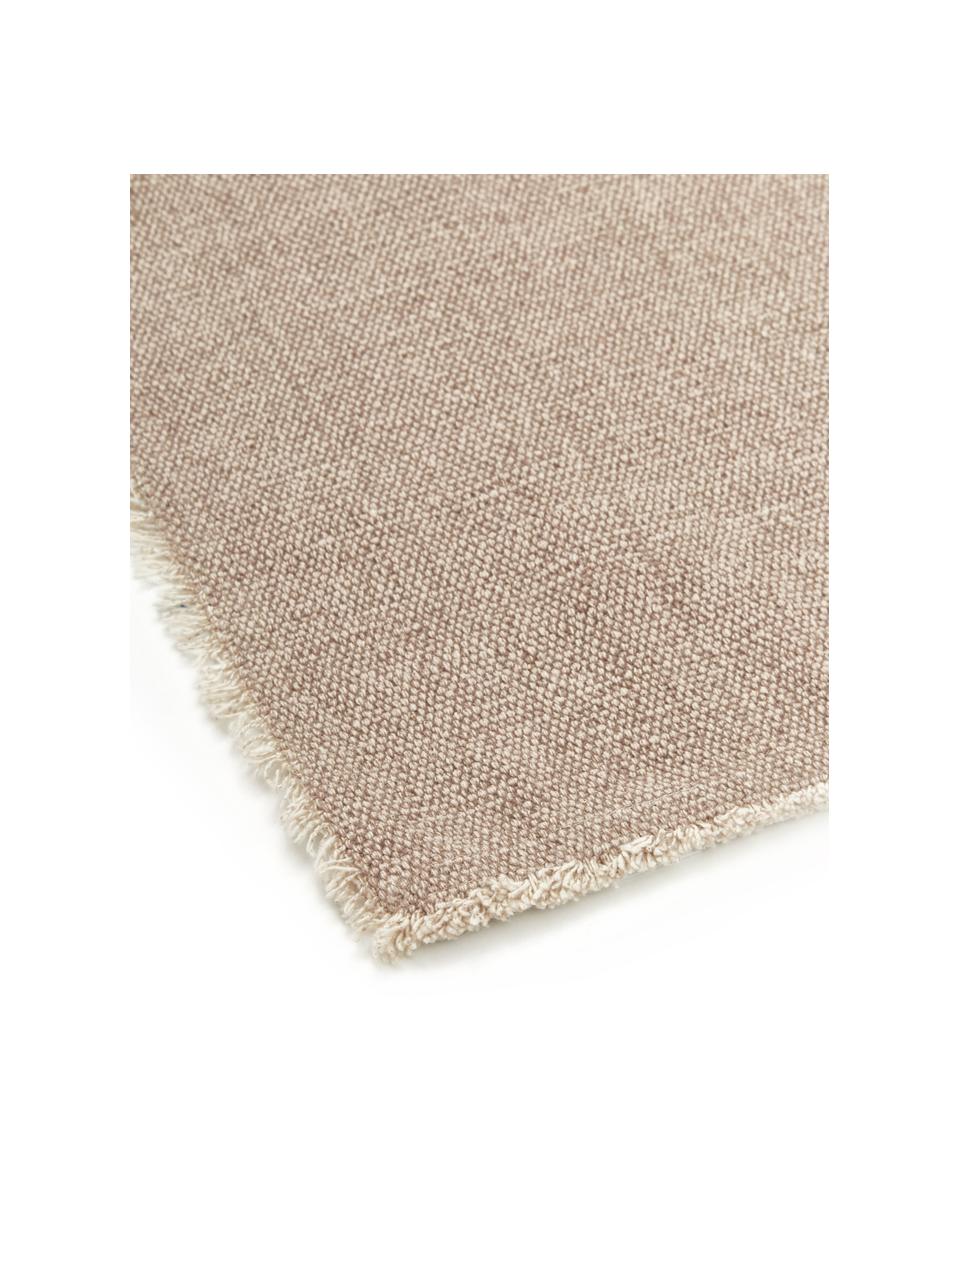 Manteles individuales de algodón Edge, 6 uds., 85% algodón, 15% fibras mixtas, Beige, An 35 x L 48 cm